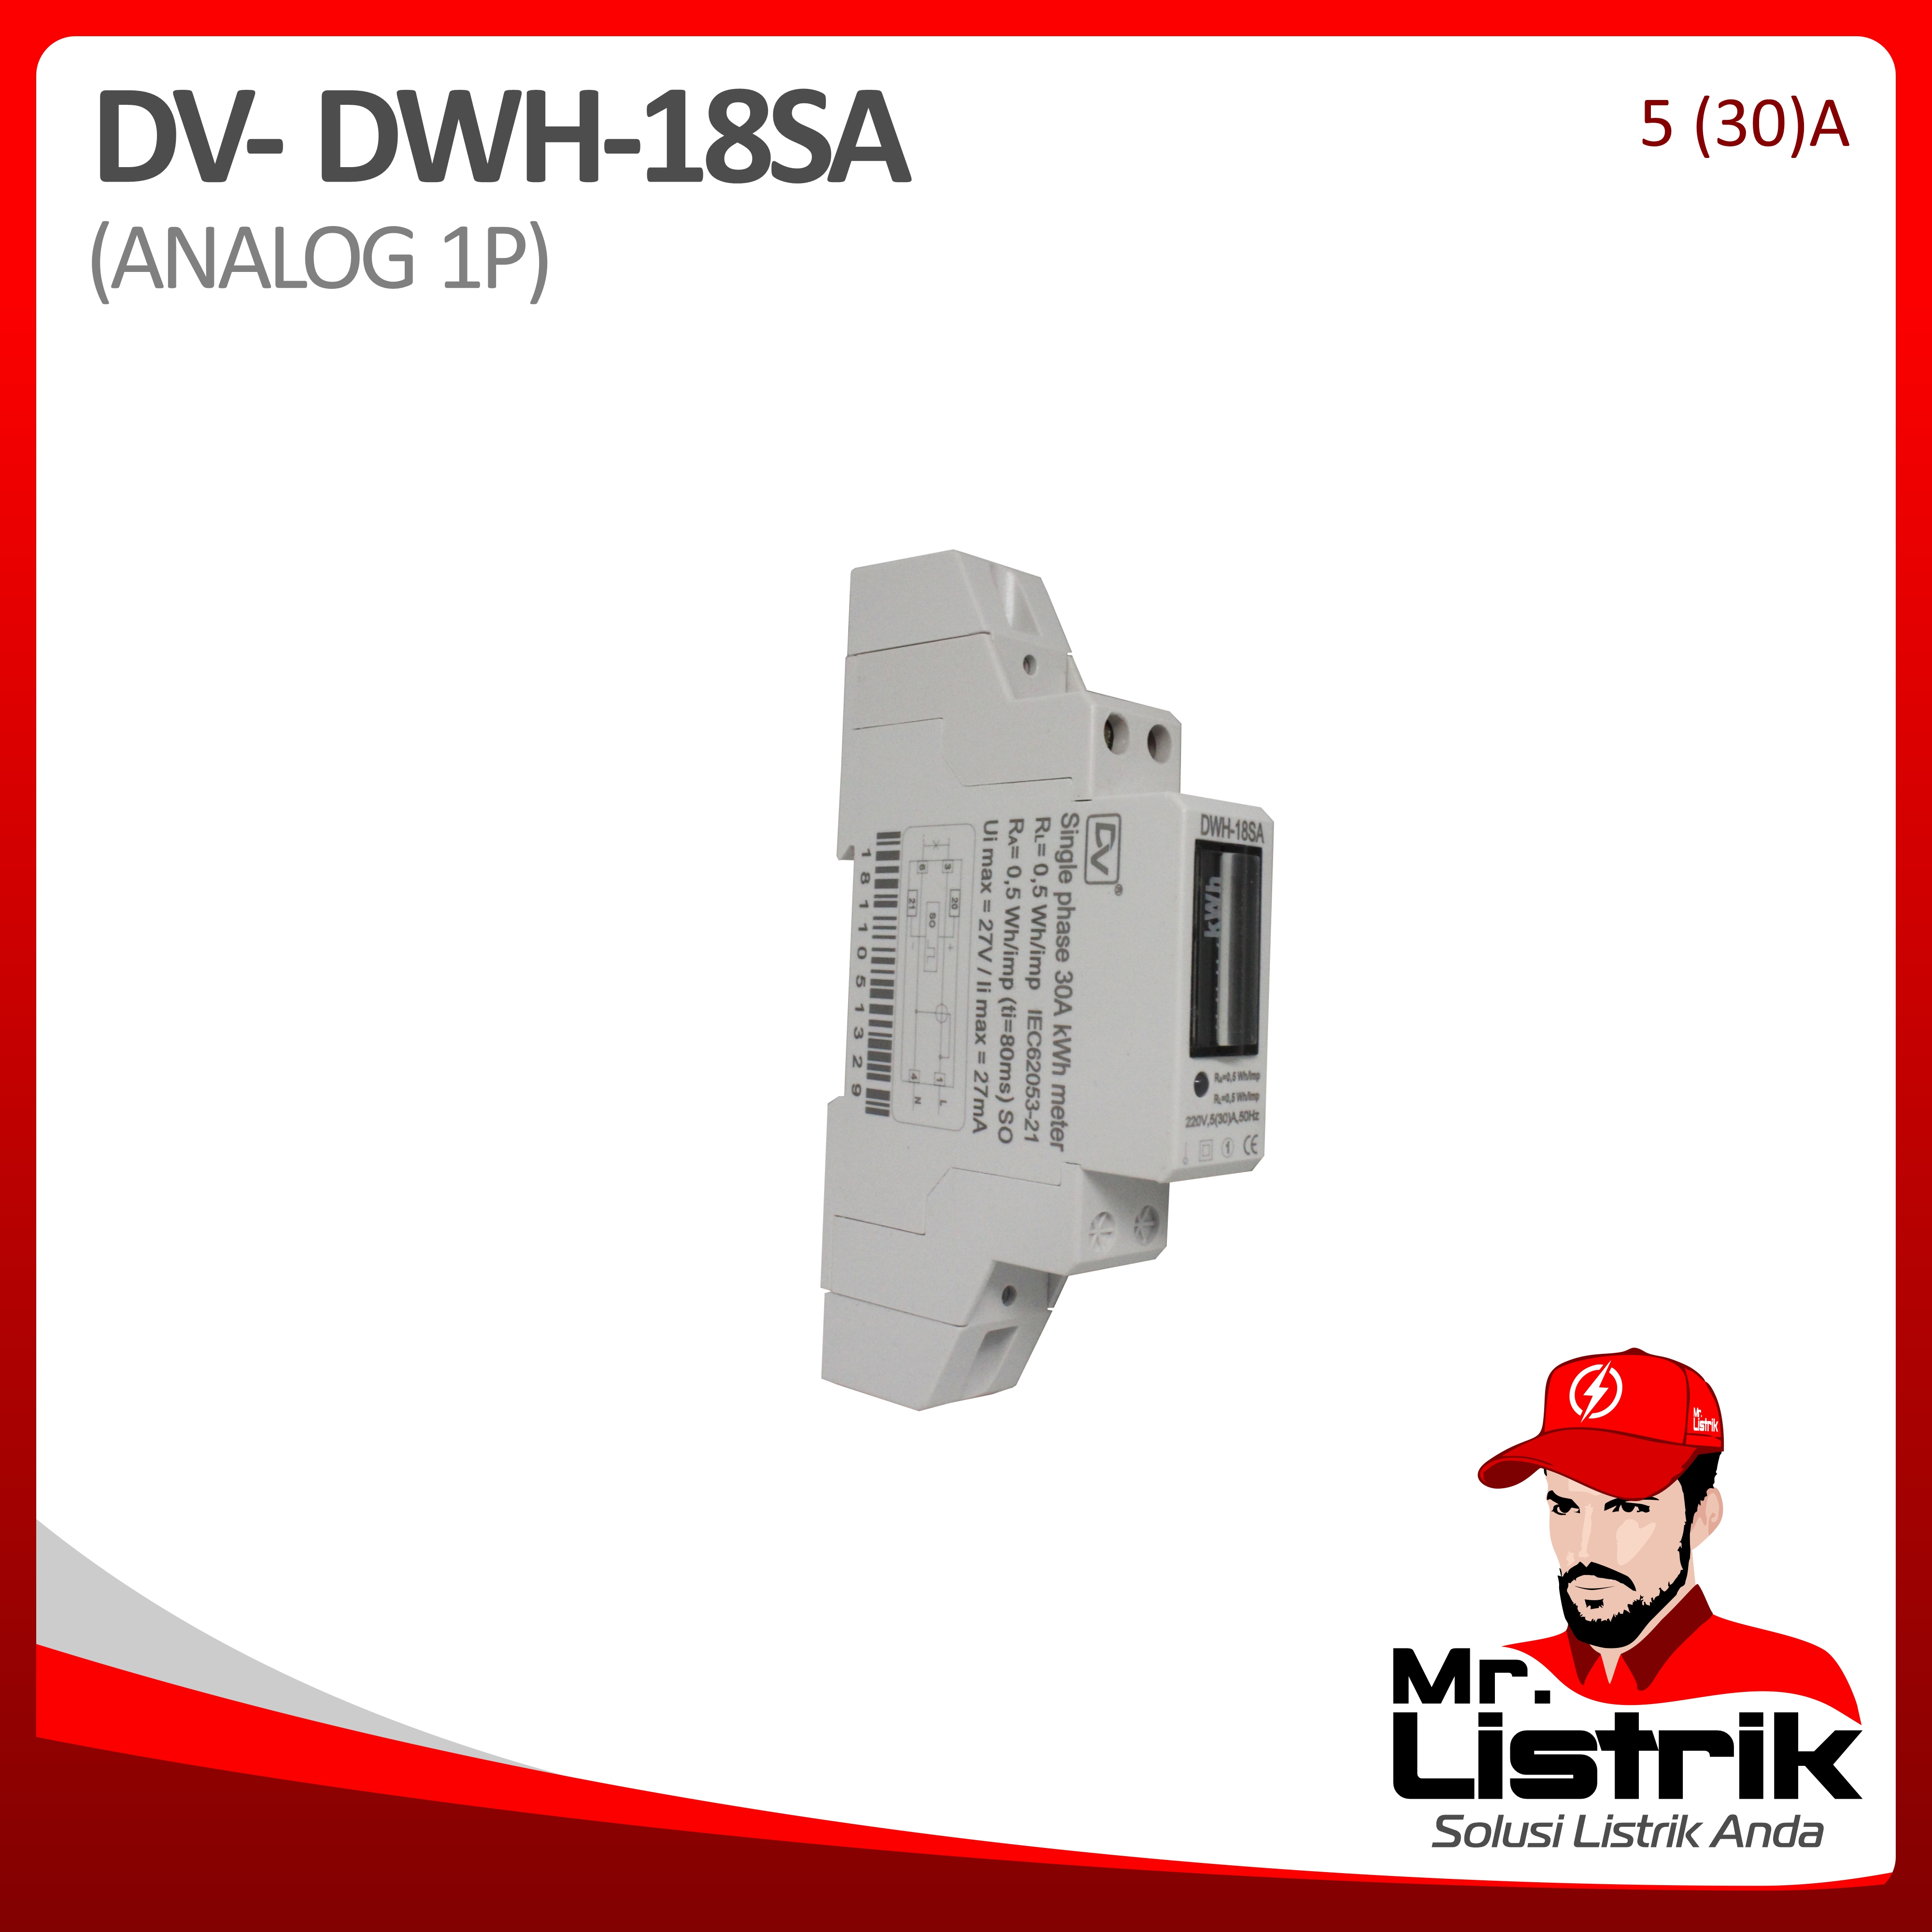 KWH Meter 1P Analog DV DWH-18SA 5(30)A